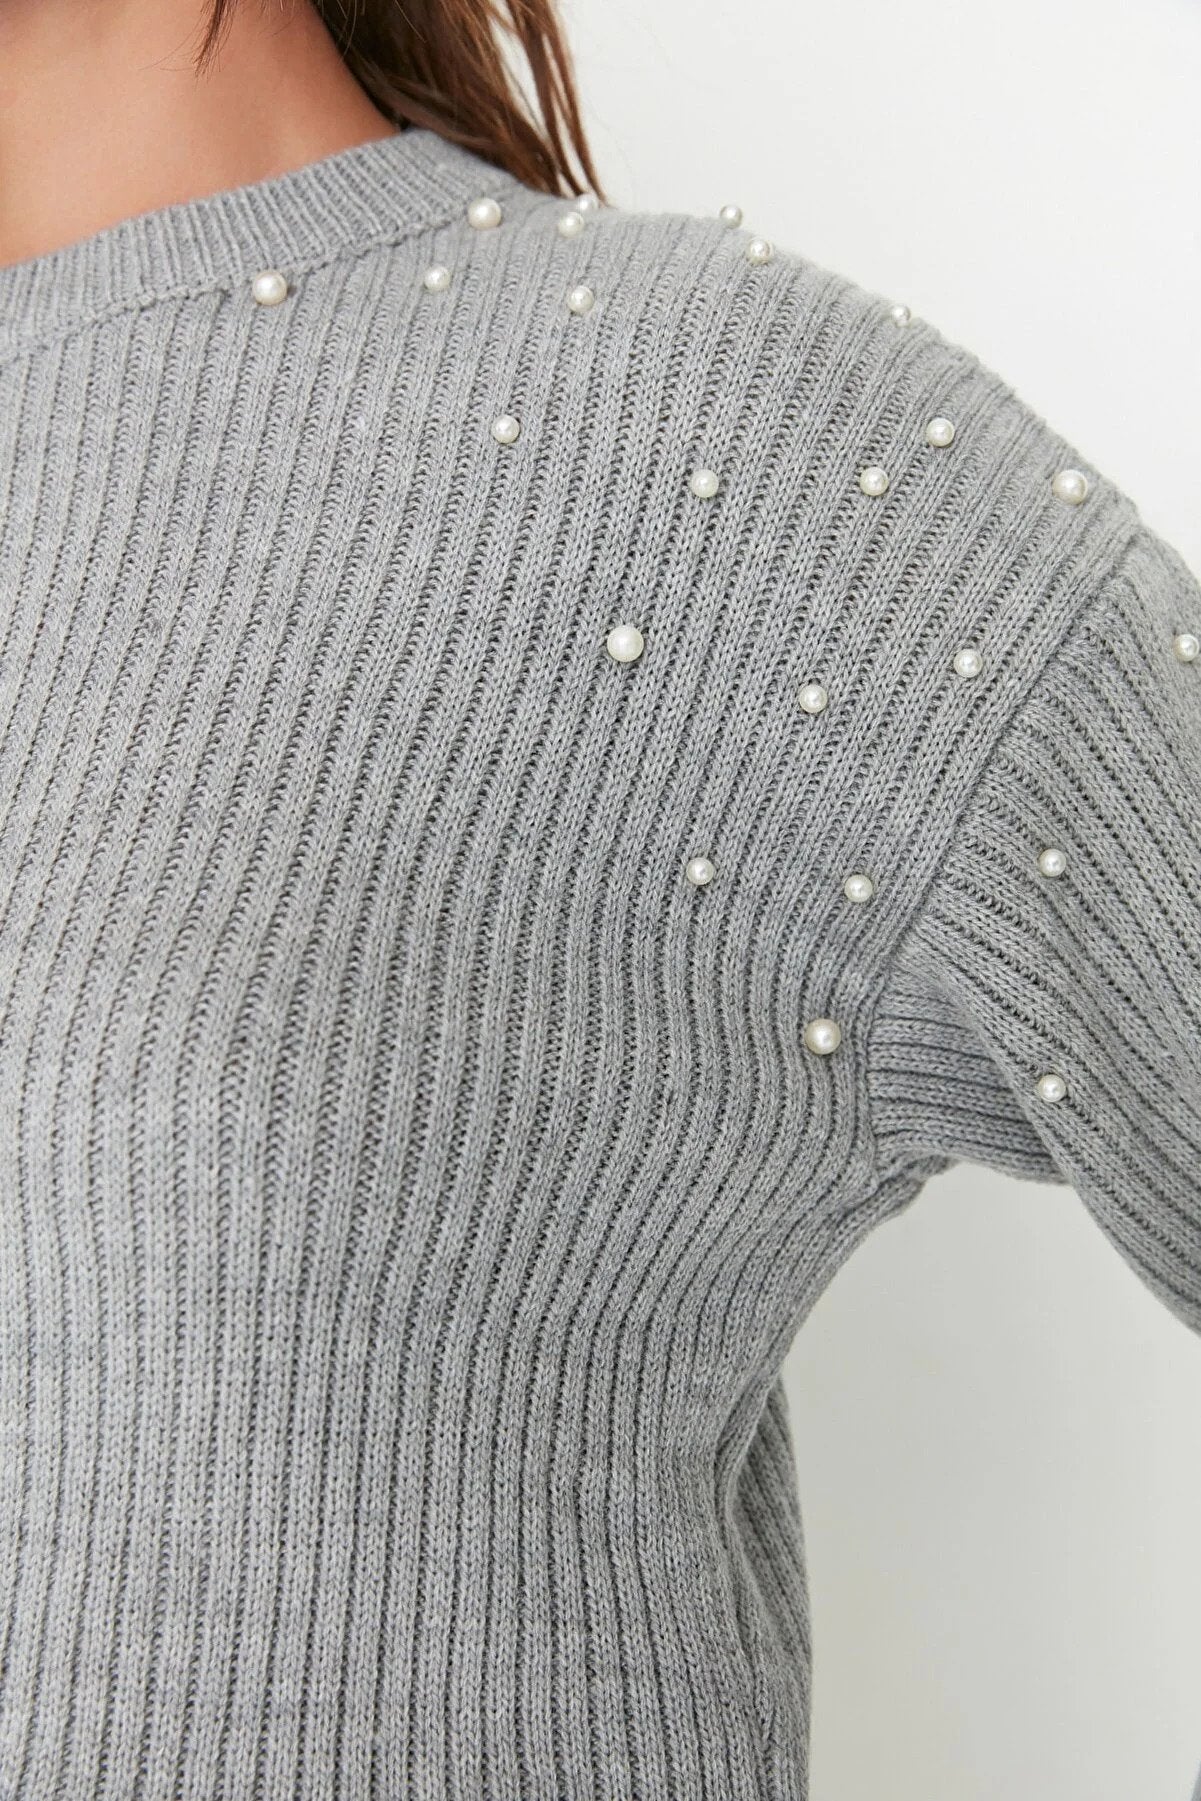 Trendyol Regular Fit Stylish Knitted Grey Sweater